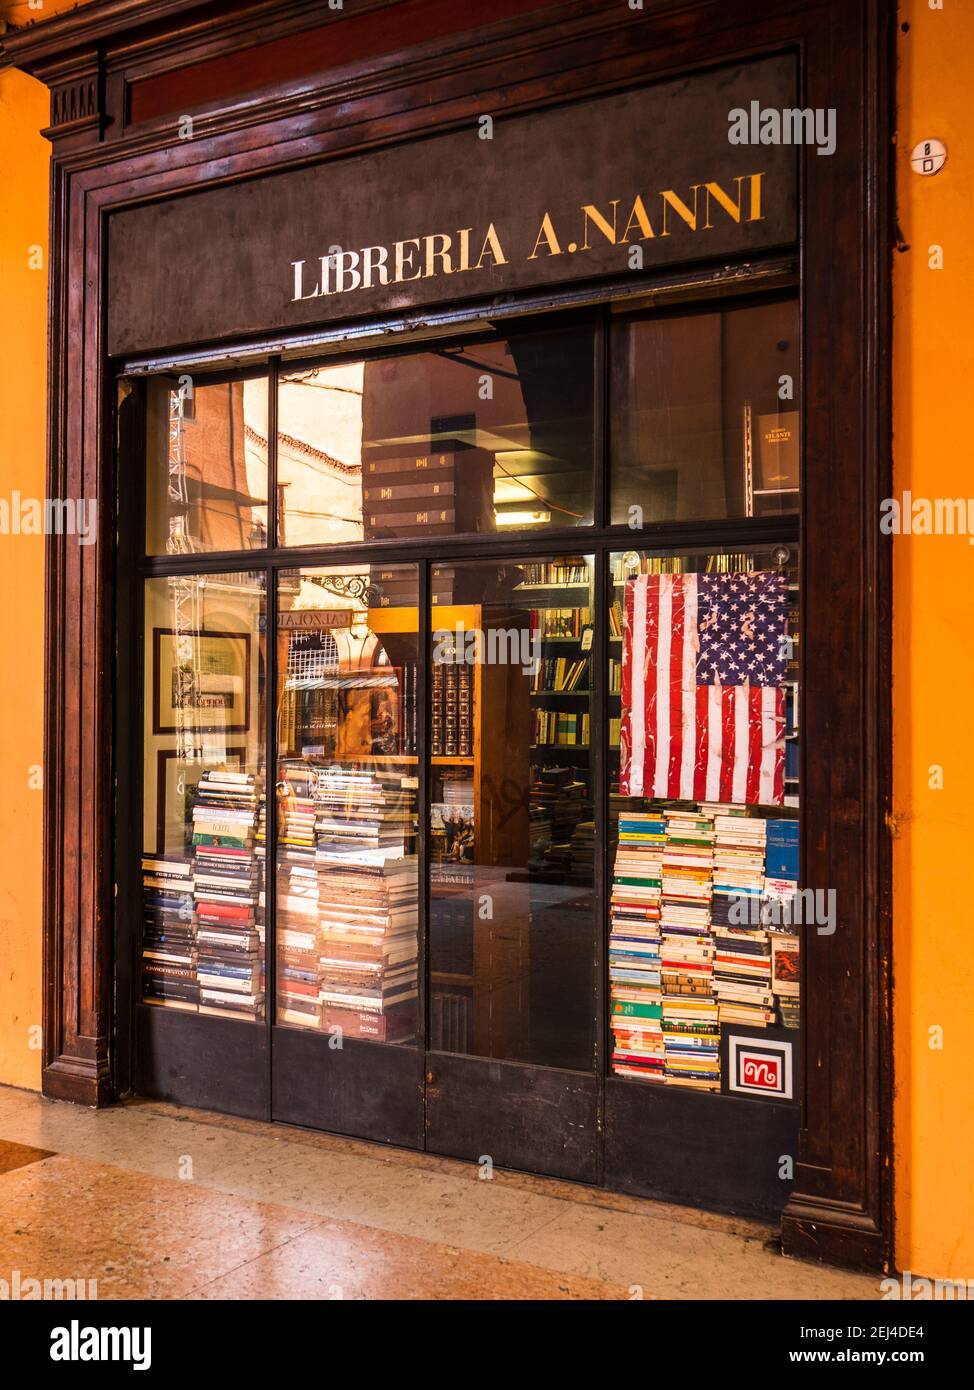 Libreria A.Nanni in the Galleria Cavour, a commercial gallery in the  medieval center of Bologna with the bookshop Libreria Nanni Stock Photo -  Alamy